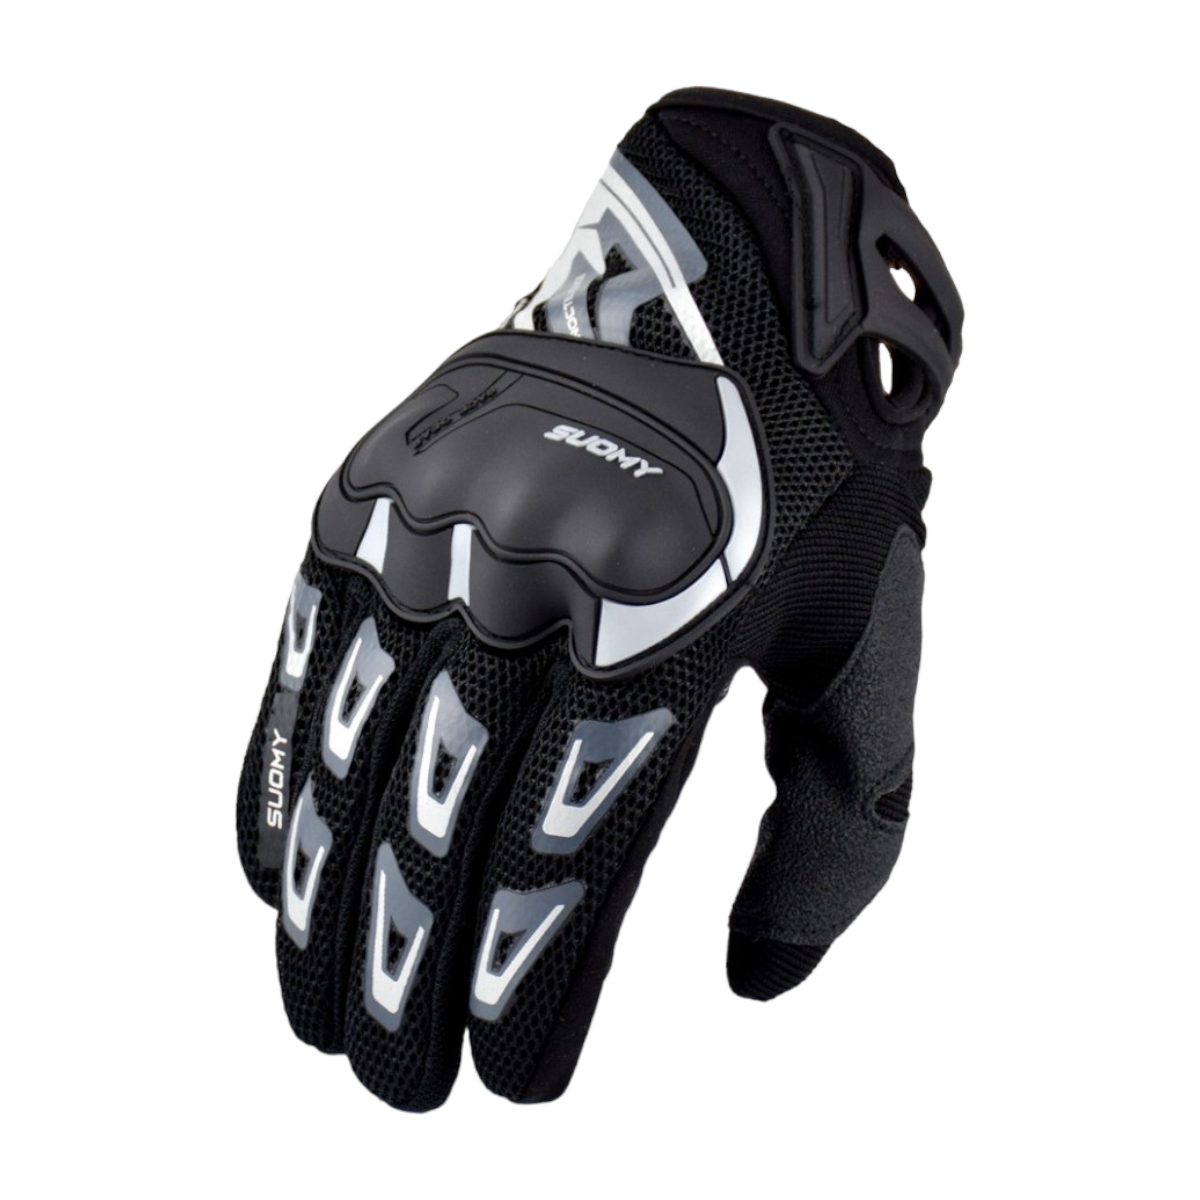 Мотоперчатки перчатки текстильные Suomy SU-11 для мотоциклиста на мотоцикл скутер мопед квадроцикл, черно-серые, XL